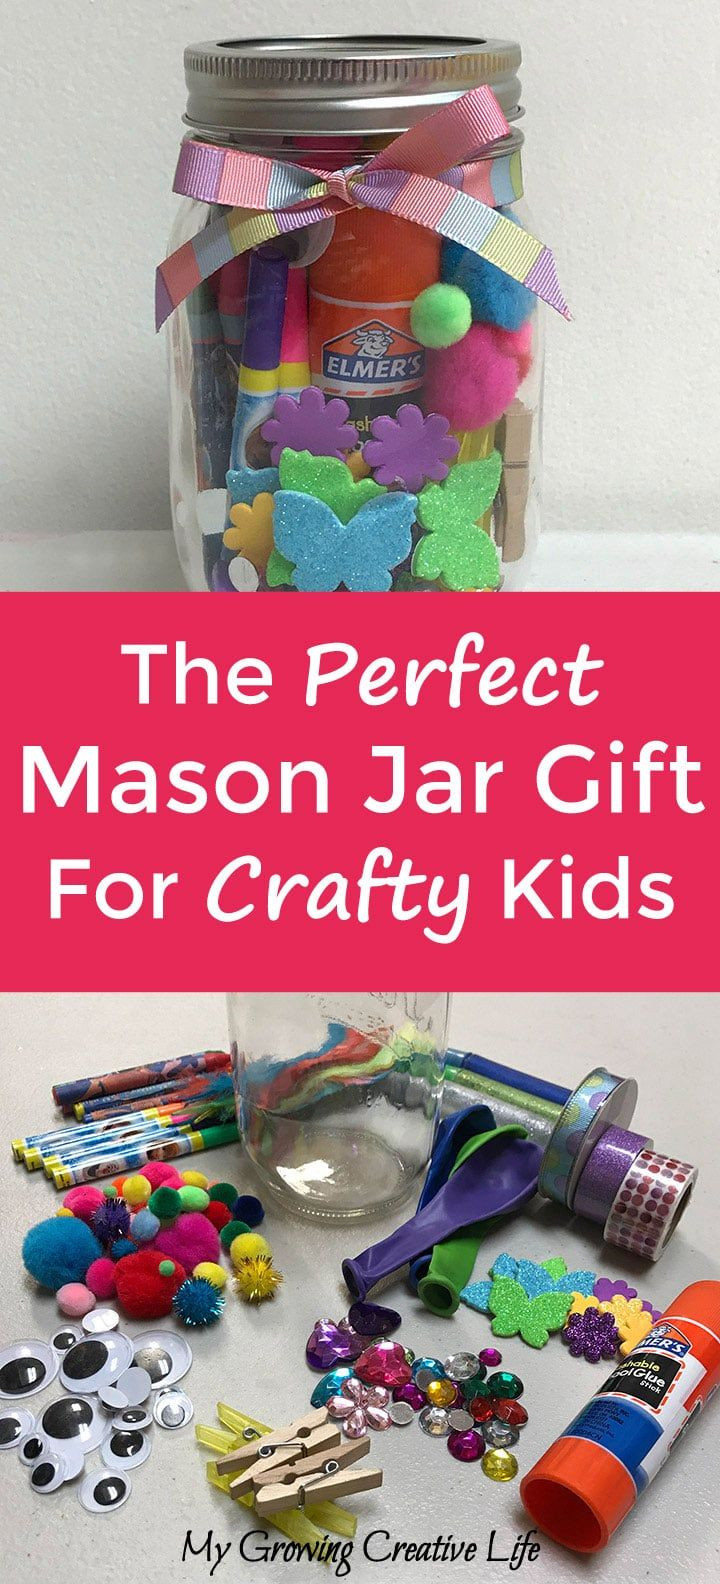 Mason Jar Gifts For Kids
 The Perfect Crafty Mason Jar Gift For Kids